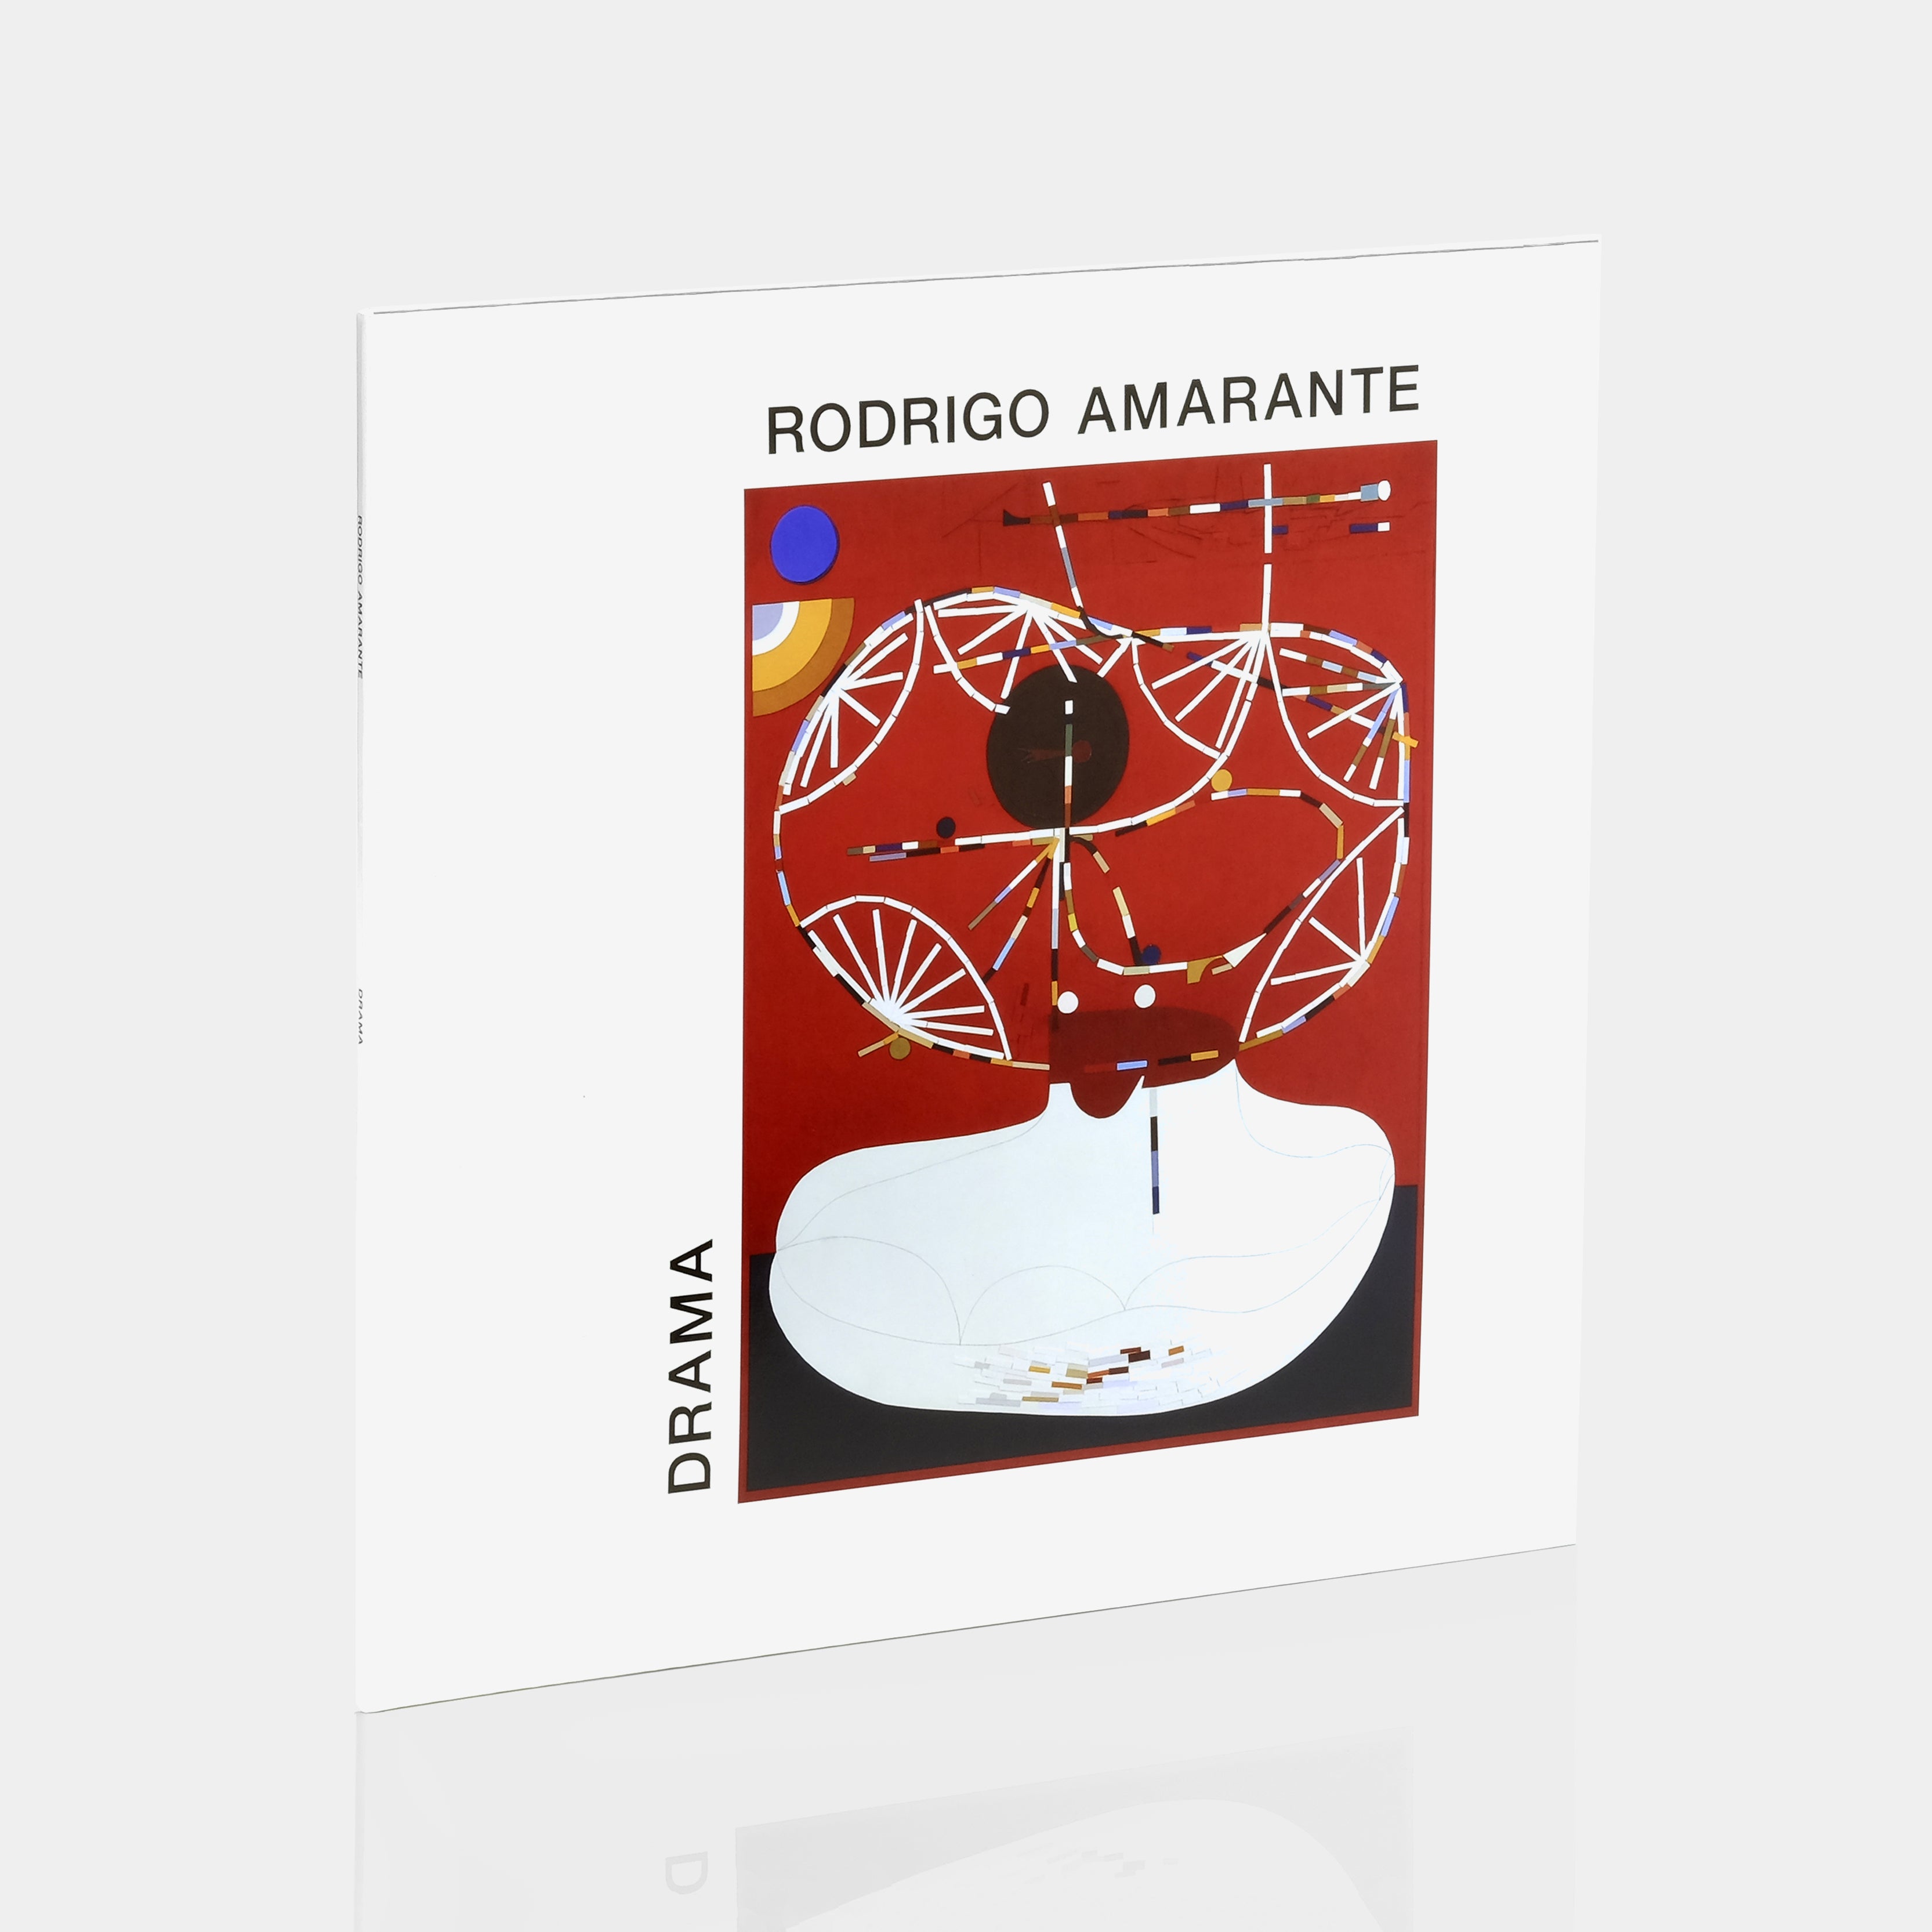 Rodrigo Amarante - Drama LP Clear Olive Vinyl Record